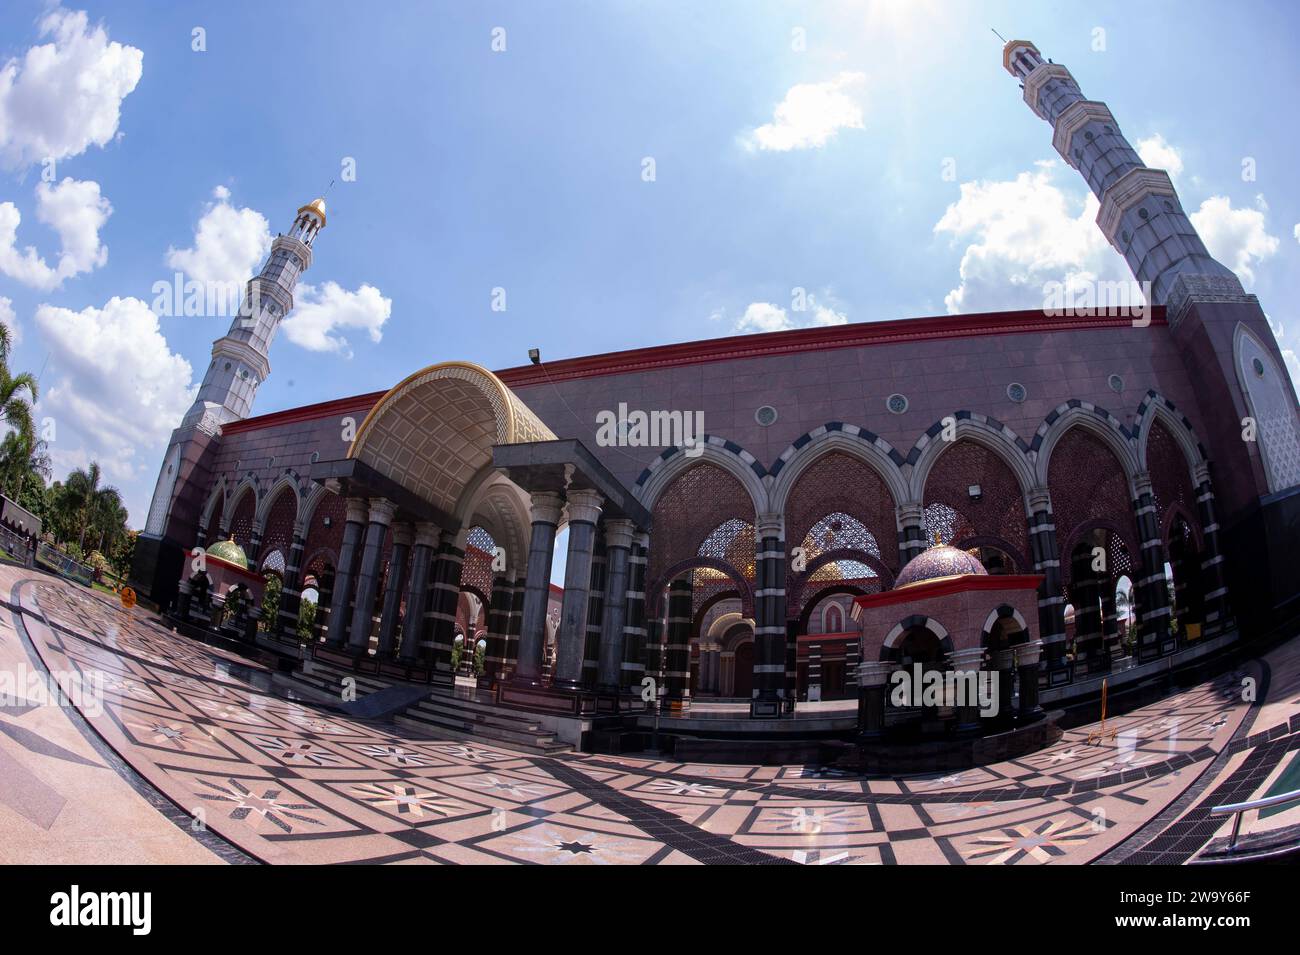 Minarets, Dian Al-Mahri Mosque, also known as Golden Dome Mosque, Depok, Jakarta, West Java, Indonesia Stock Photo